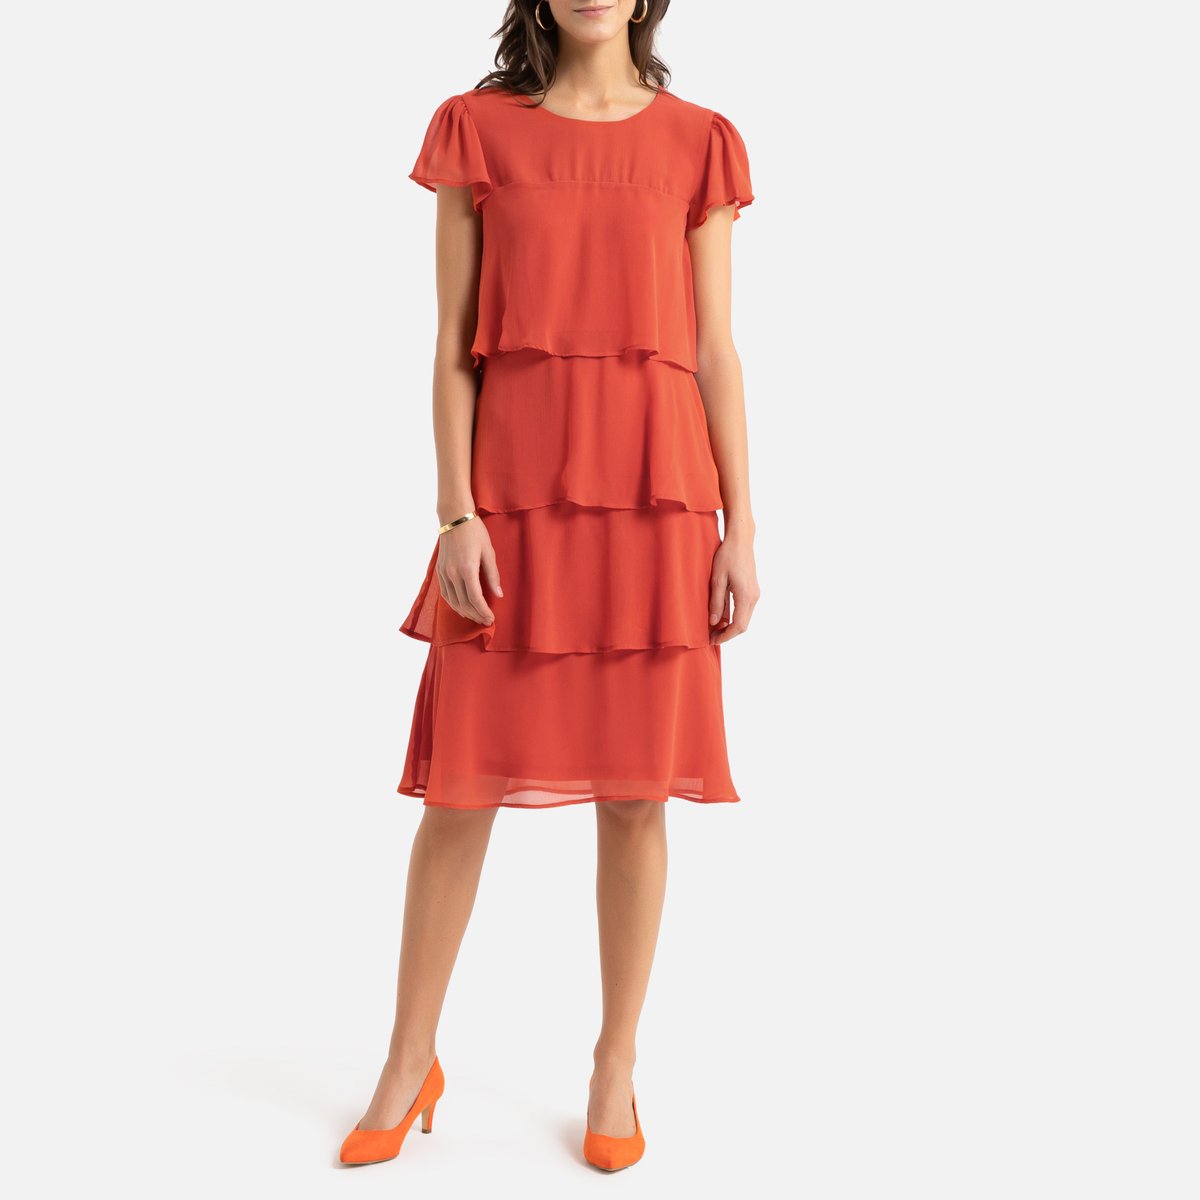 Платье La Redoute С воланом из жатого крепа 36 (FR) - 42 (RUS) оранжевый, размер 36 (FR) - 42 (RUS) С воланом из жатого крепа 36 (FR) - 42 (RUS) оранжевый - фото 2